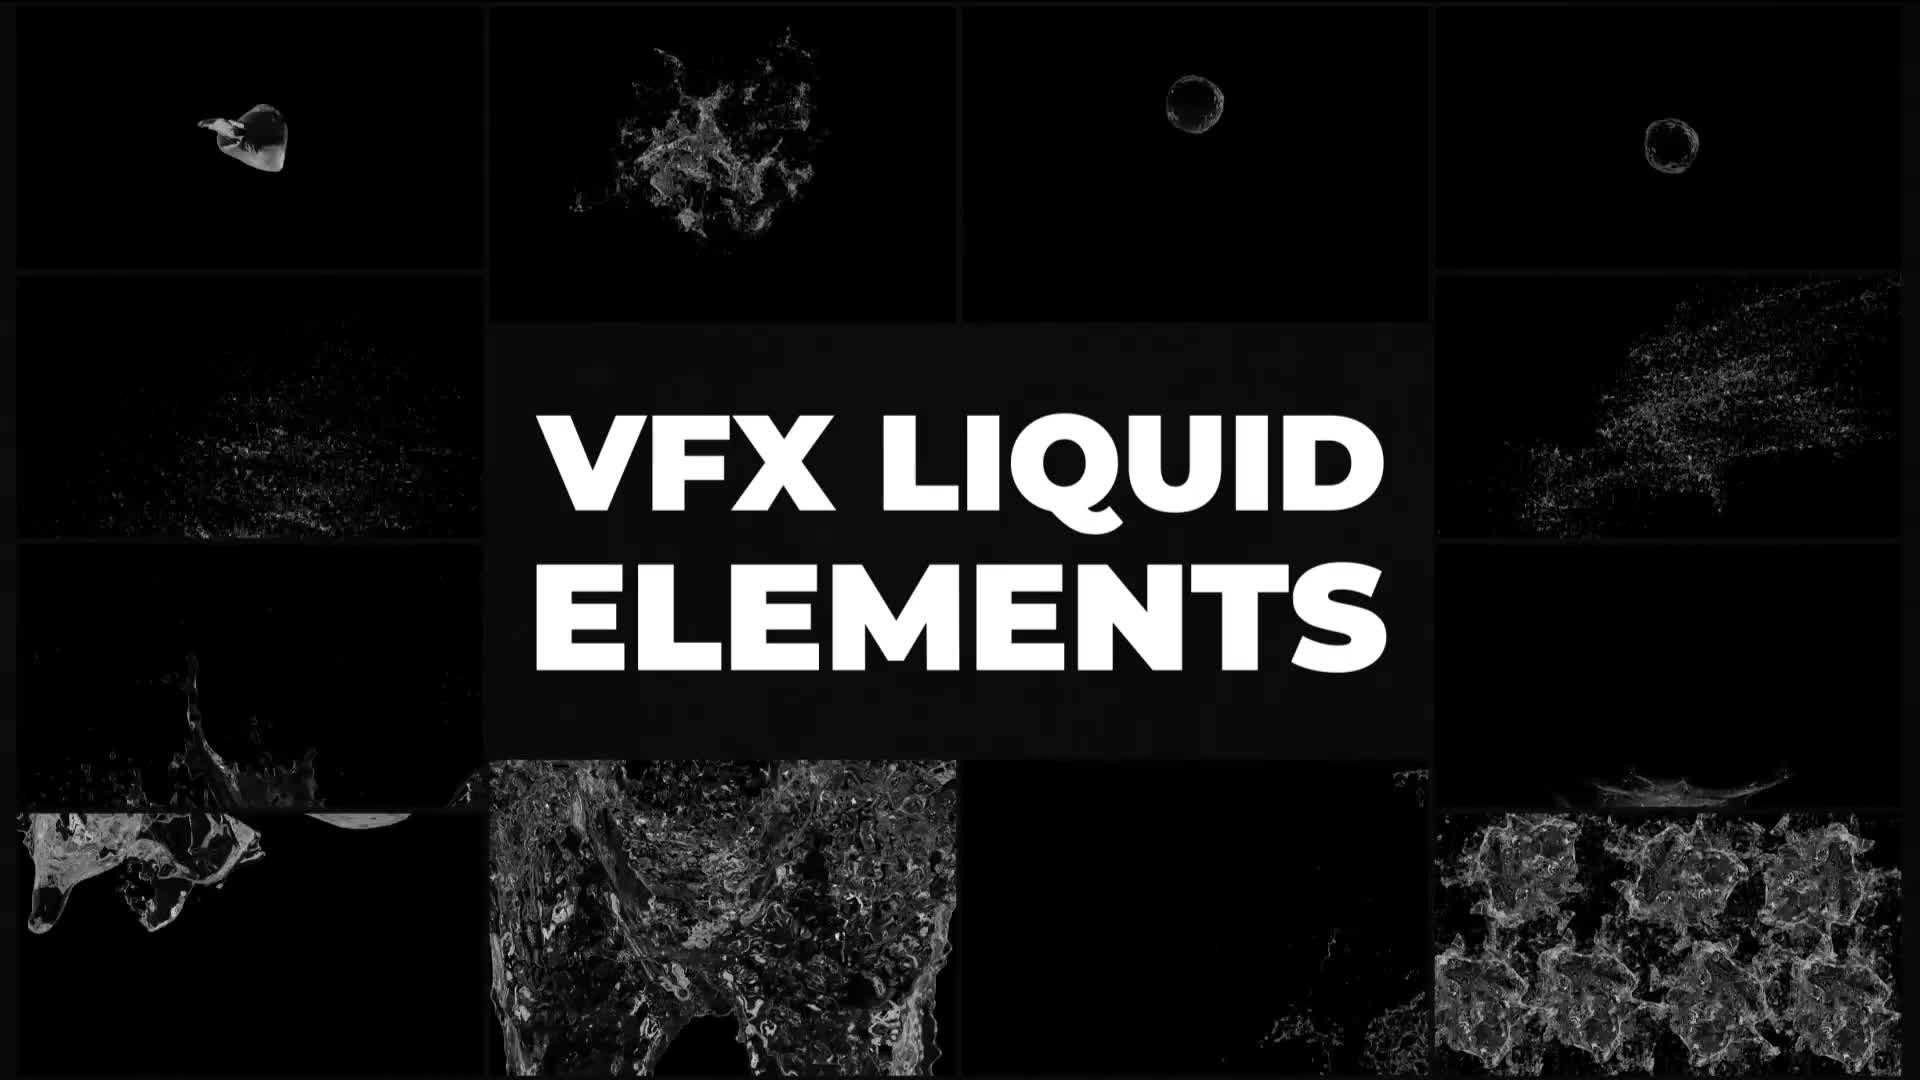  Liquid VFX | Premiere Pro MOGRT 